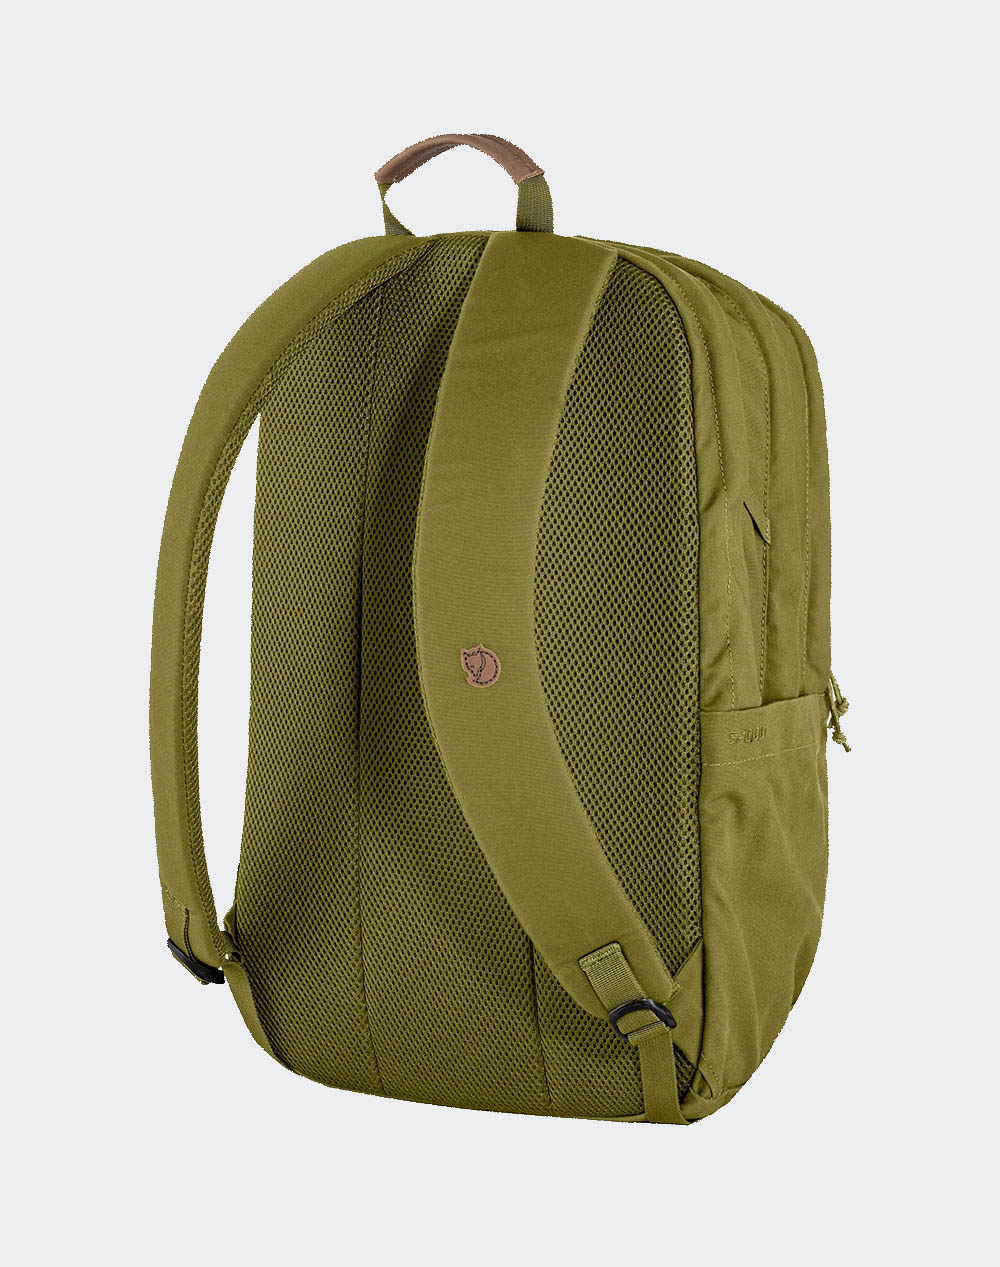 FJALLRAVEN Räven 28 Backpack (Dimensions: 47 x 31 x 21 cm, 28 liters)